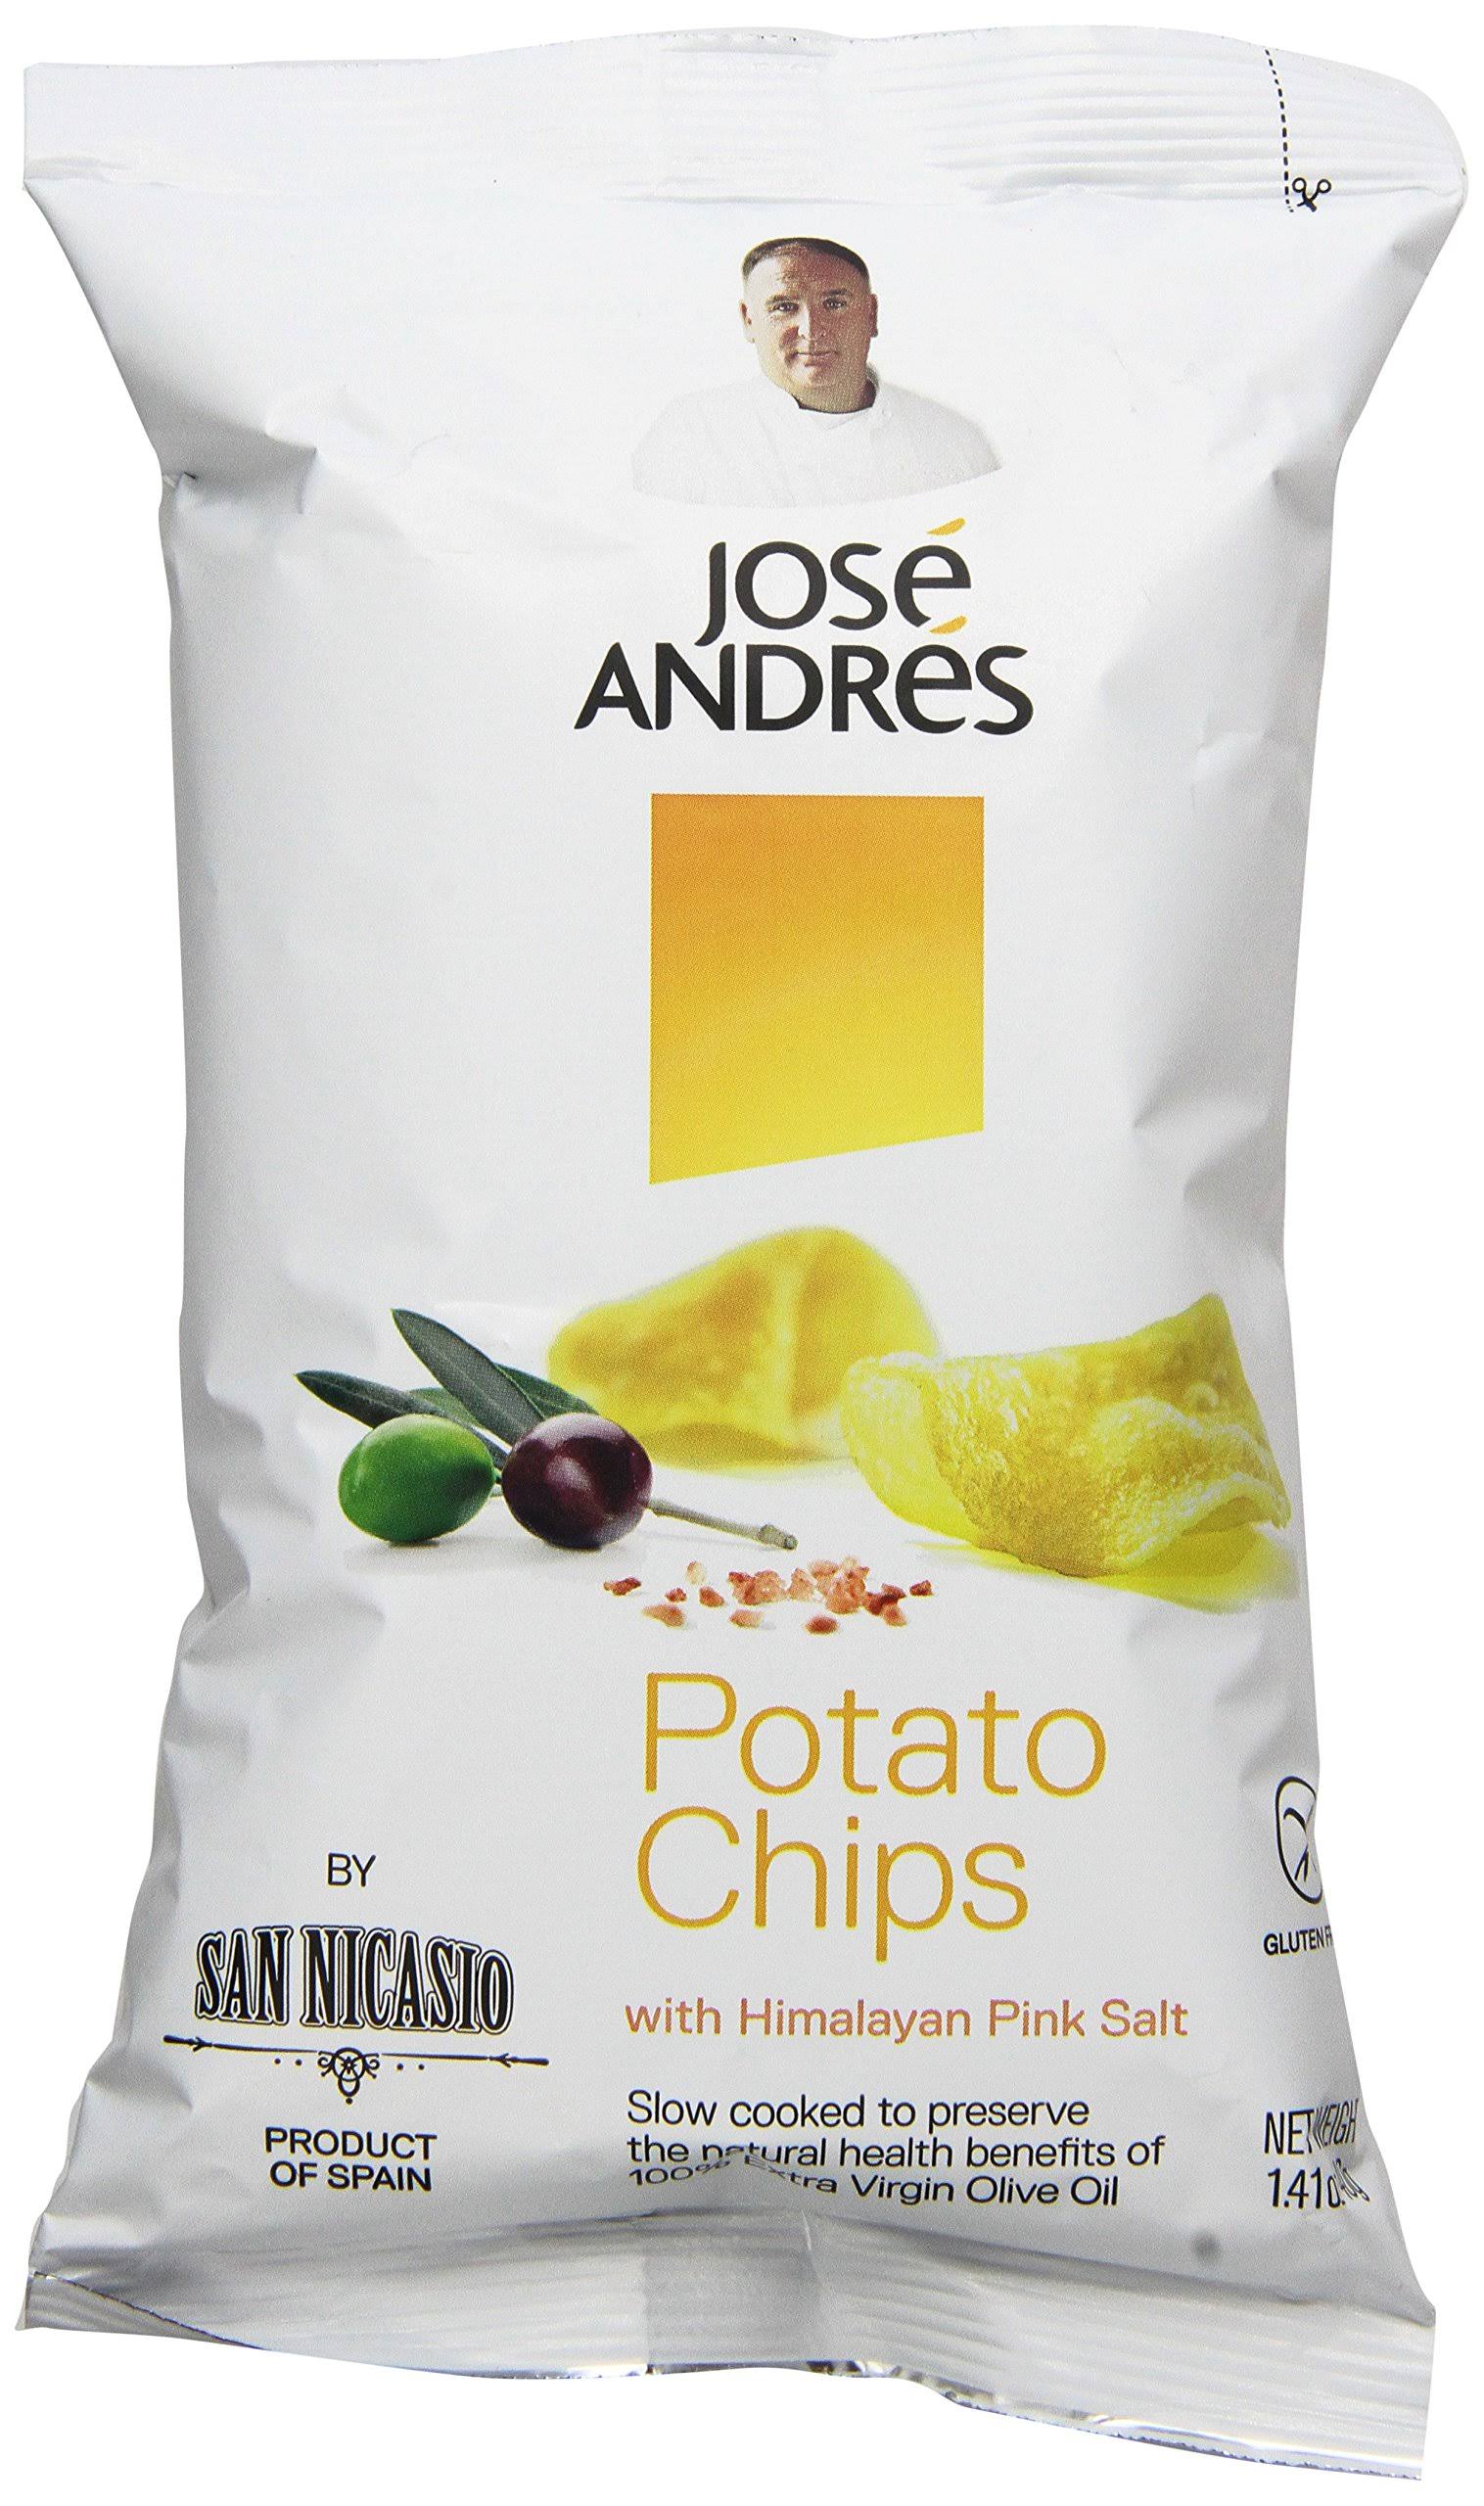 Jose Andres Potato Chips - 1.41 oz bag